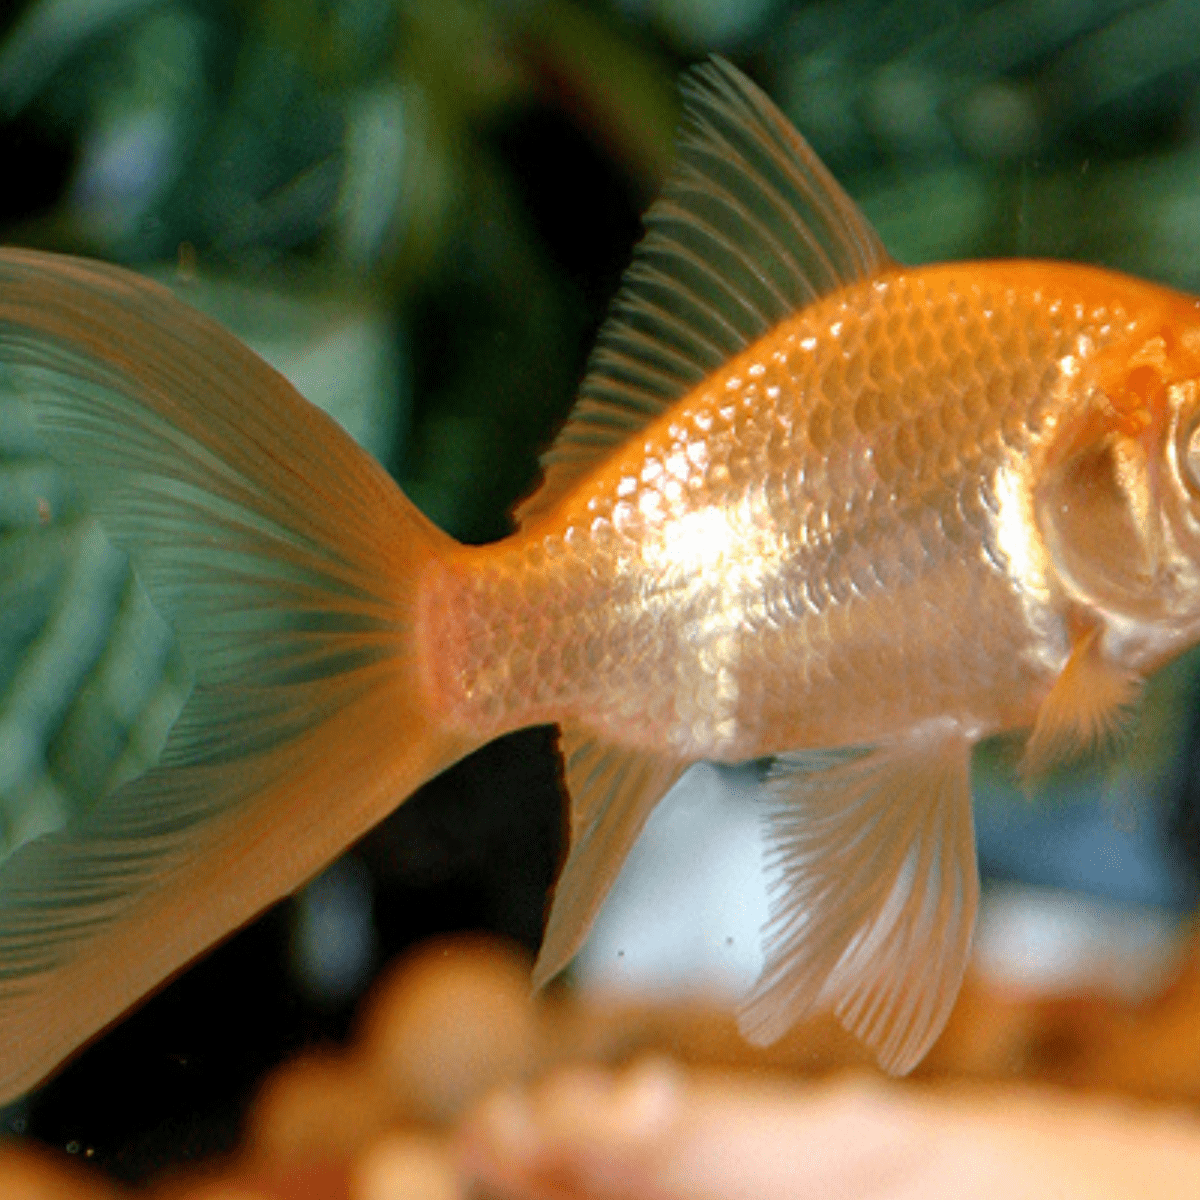 Four foot tall fish tank goldfish originally a dining table